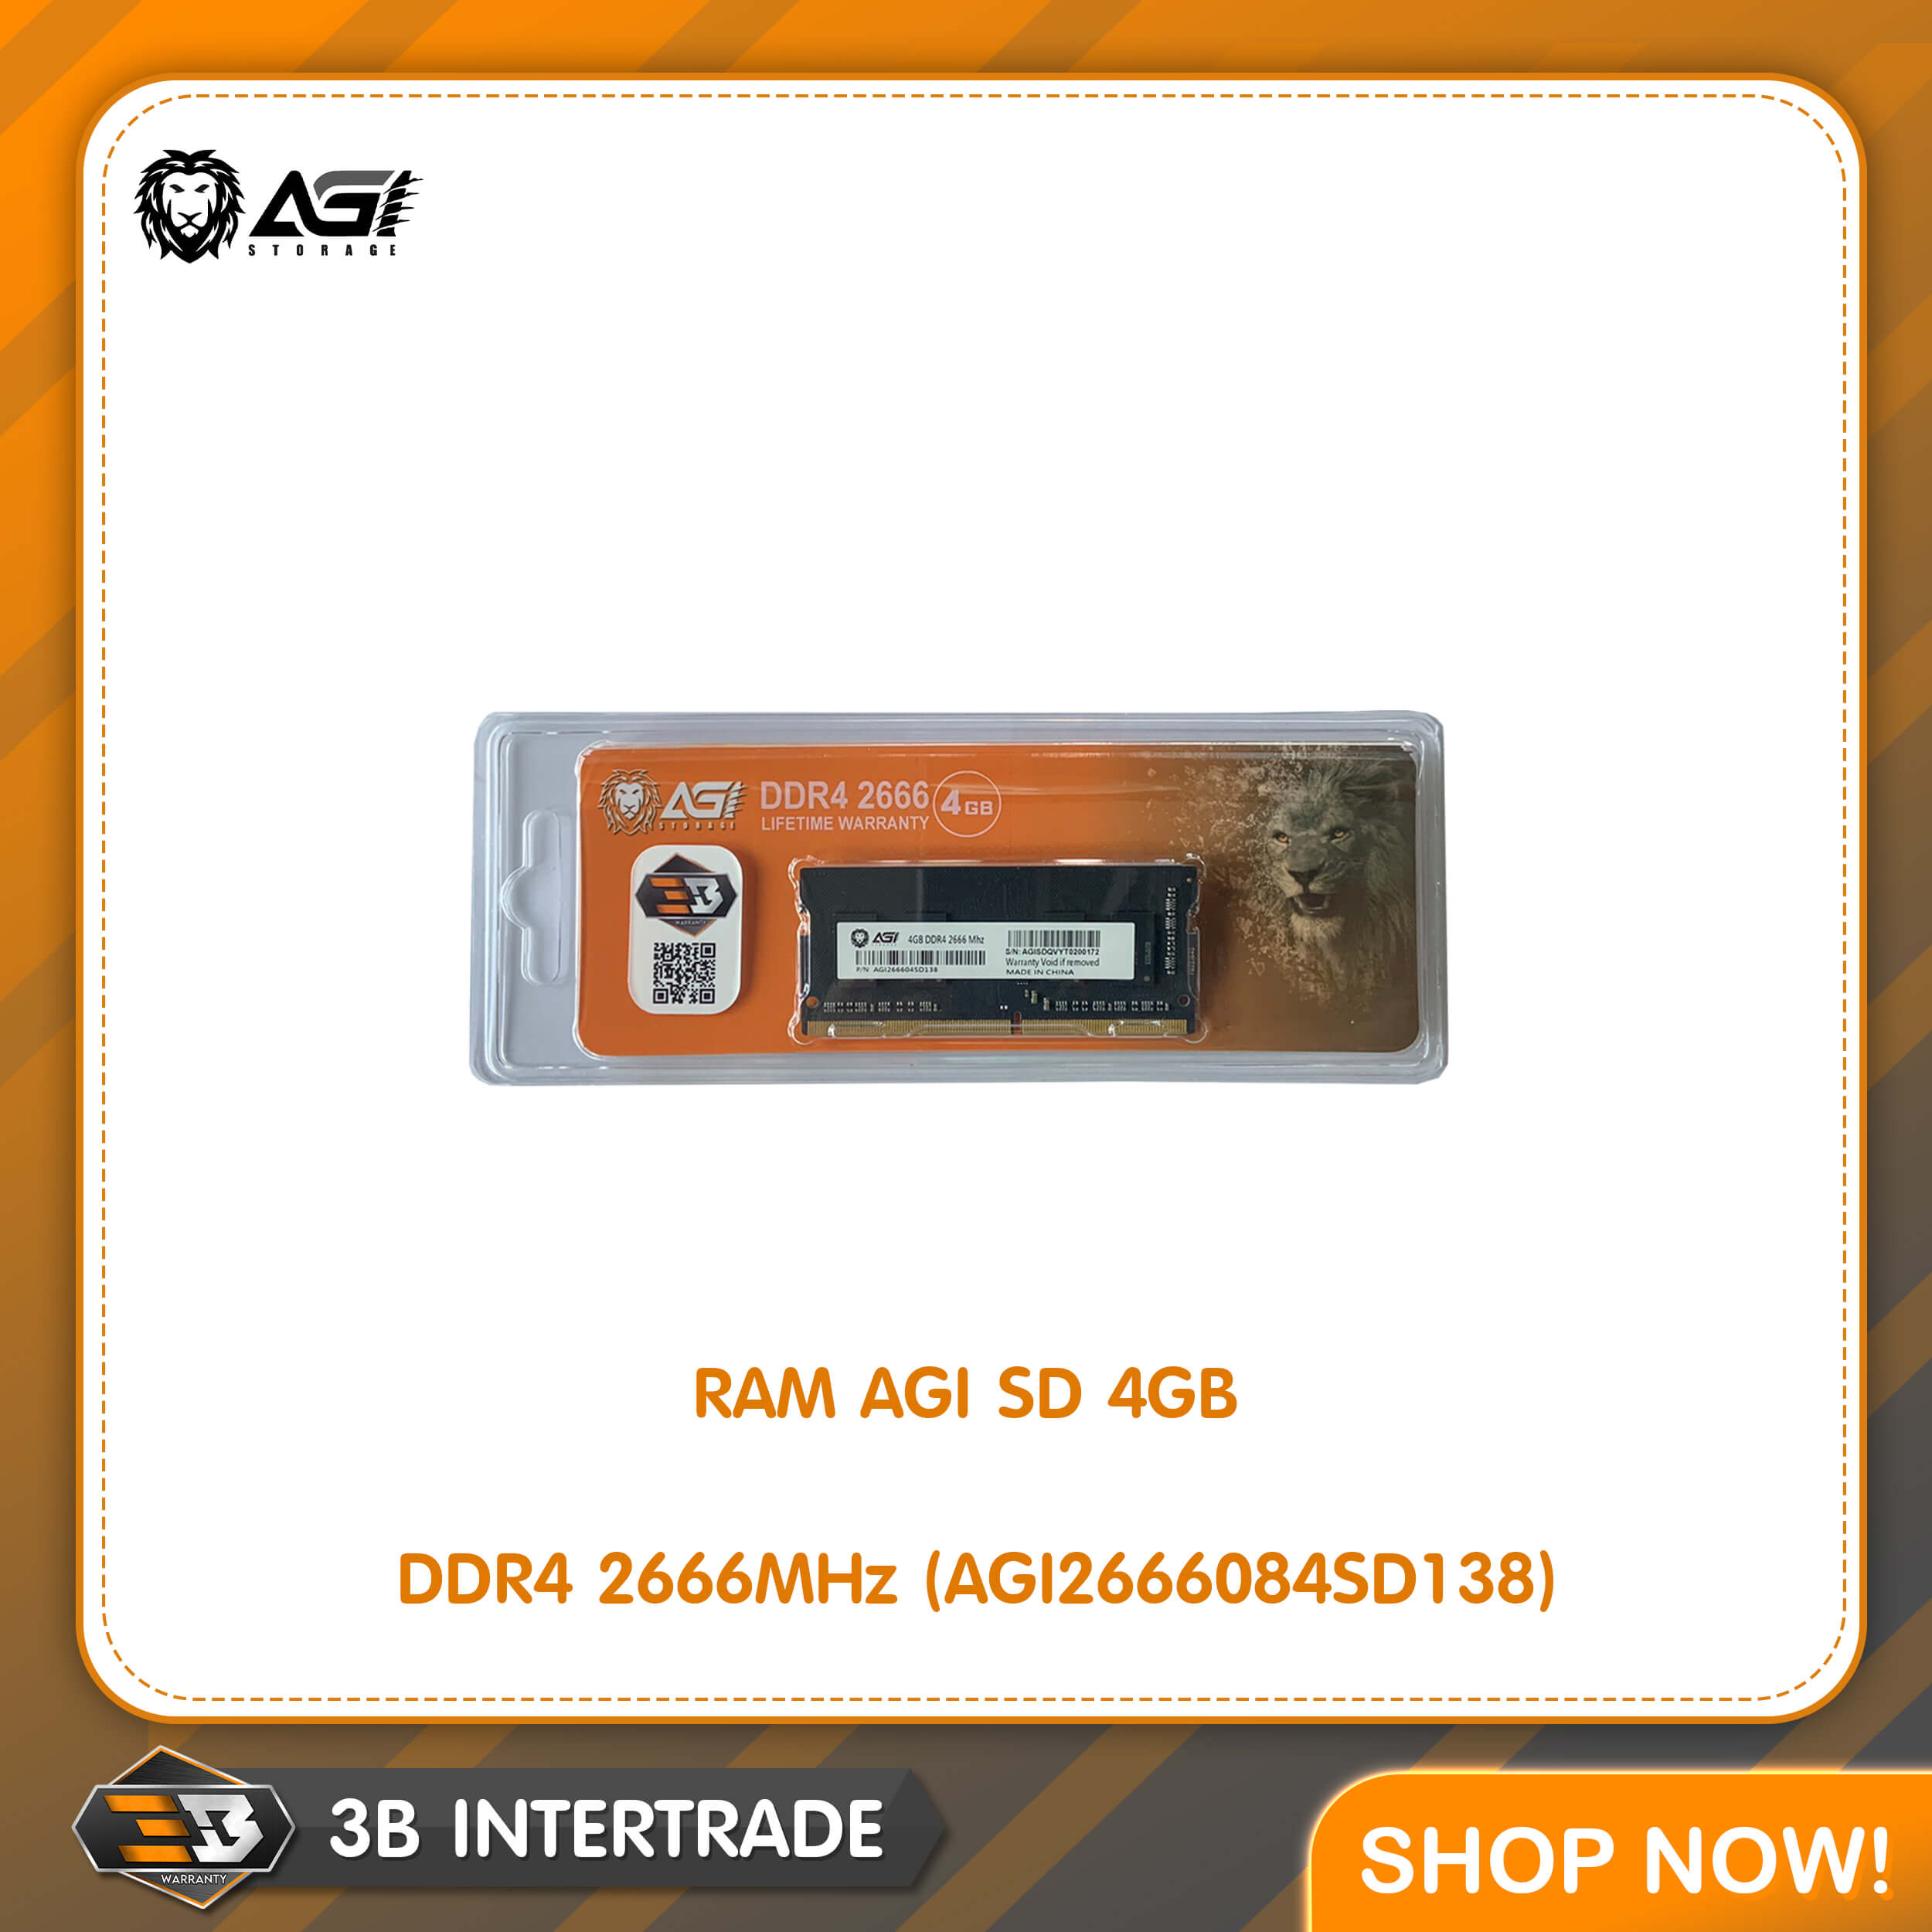 RAM NB AGI SD 4GB DDR4 2666MHz (AGI2666084SD138)